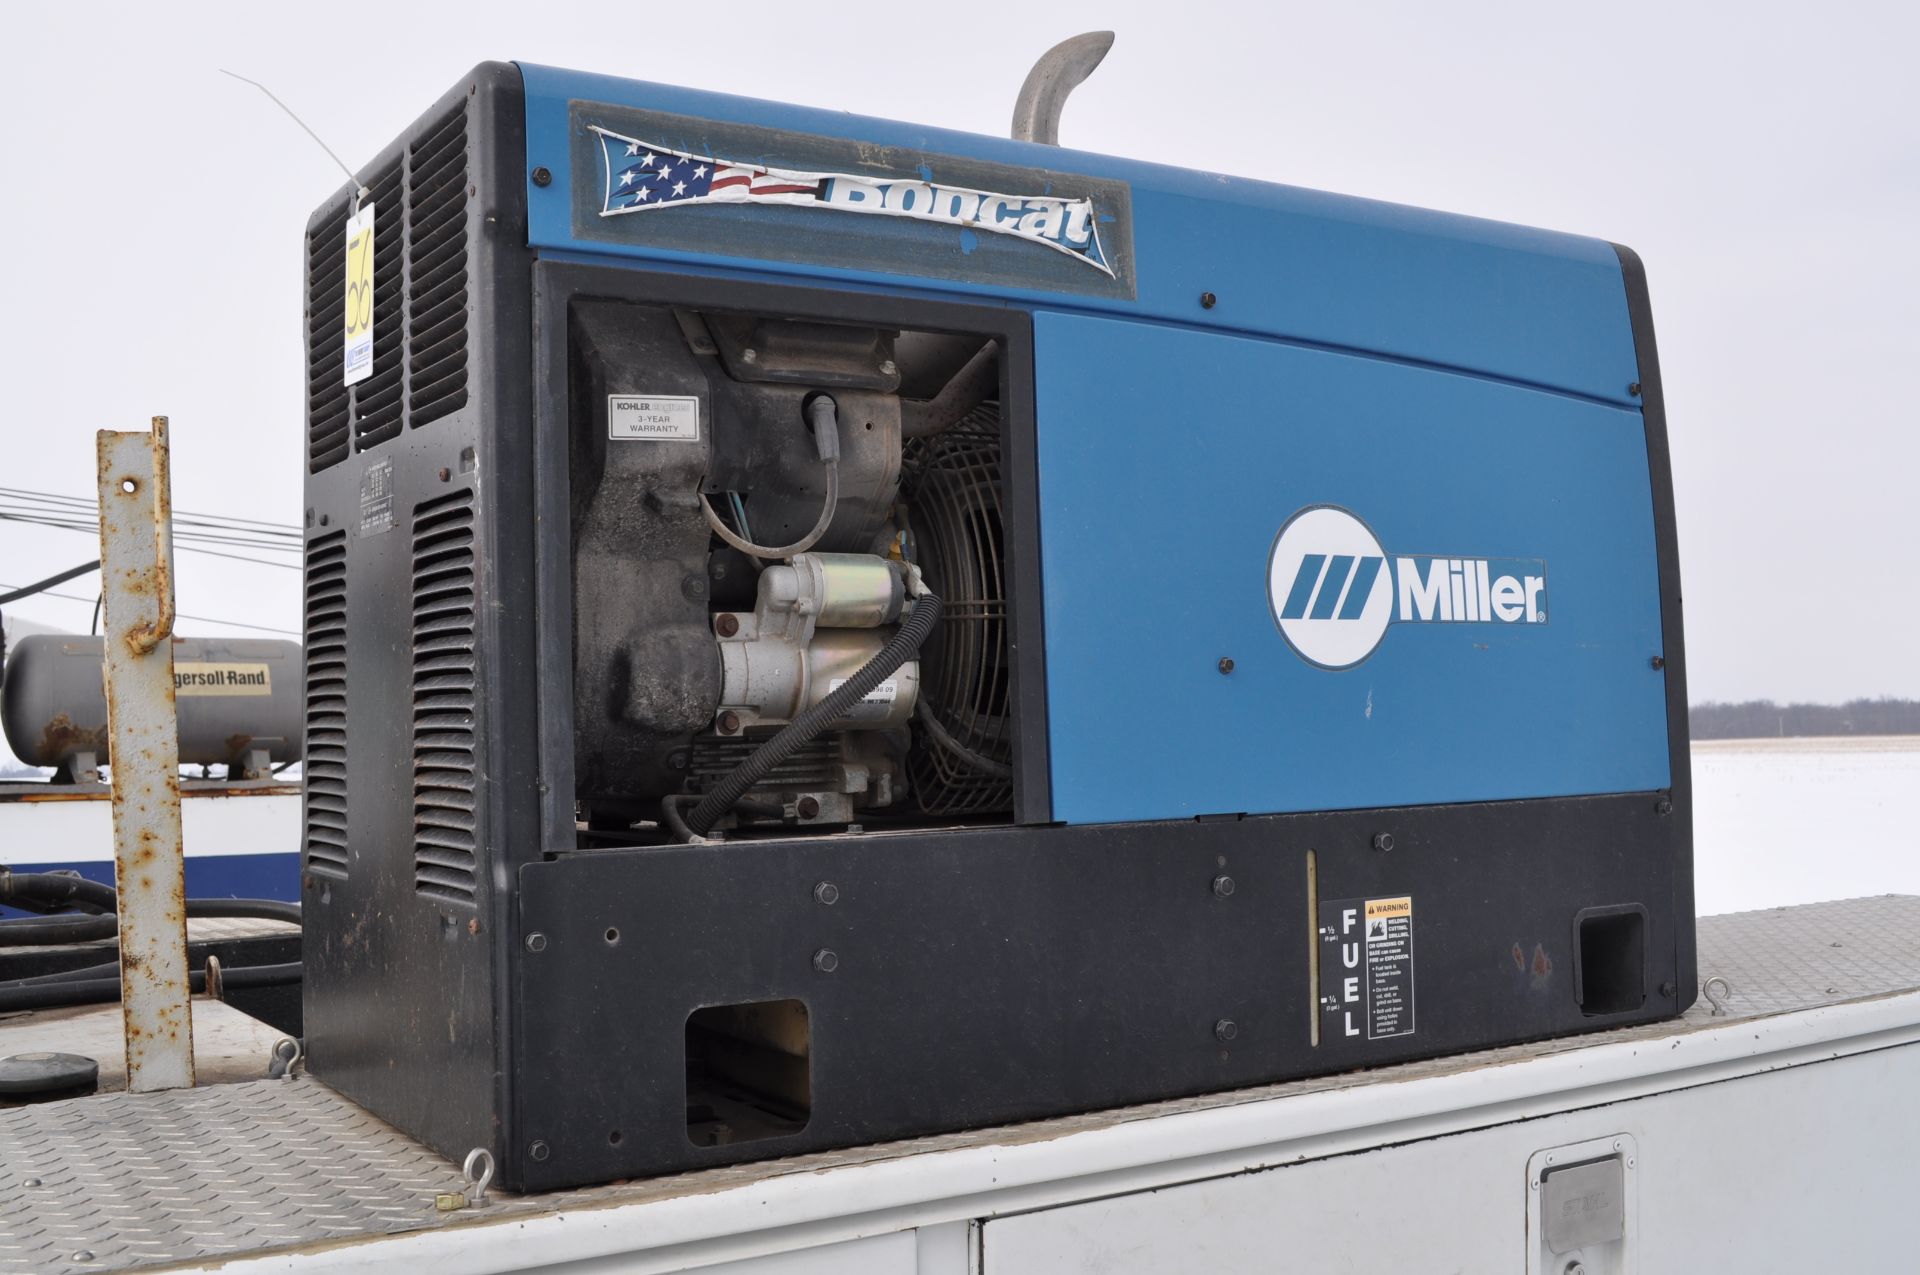 Miller Bobcat 225 welder/generator, 218 hrs, Kohler gas engine